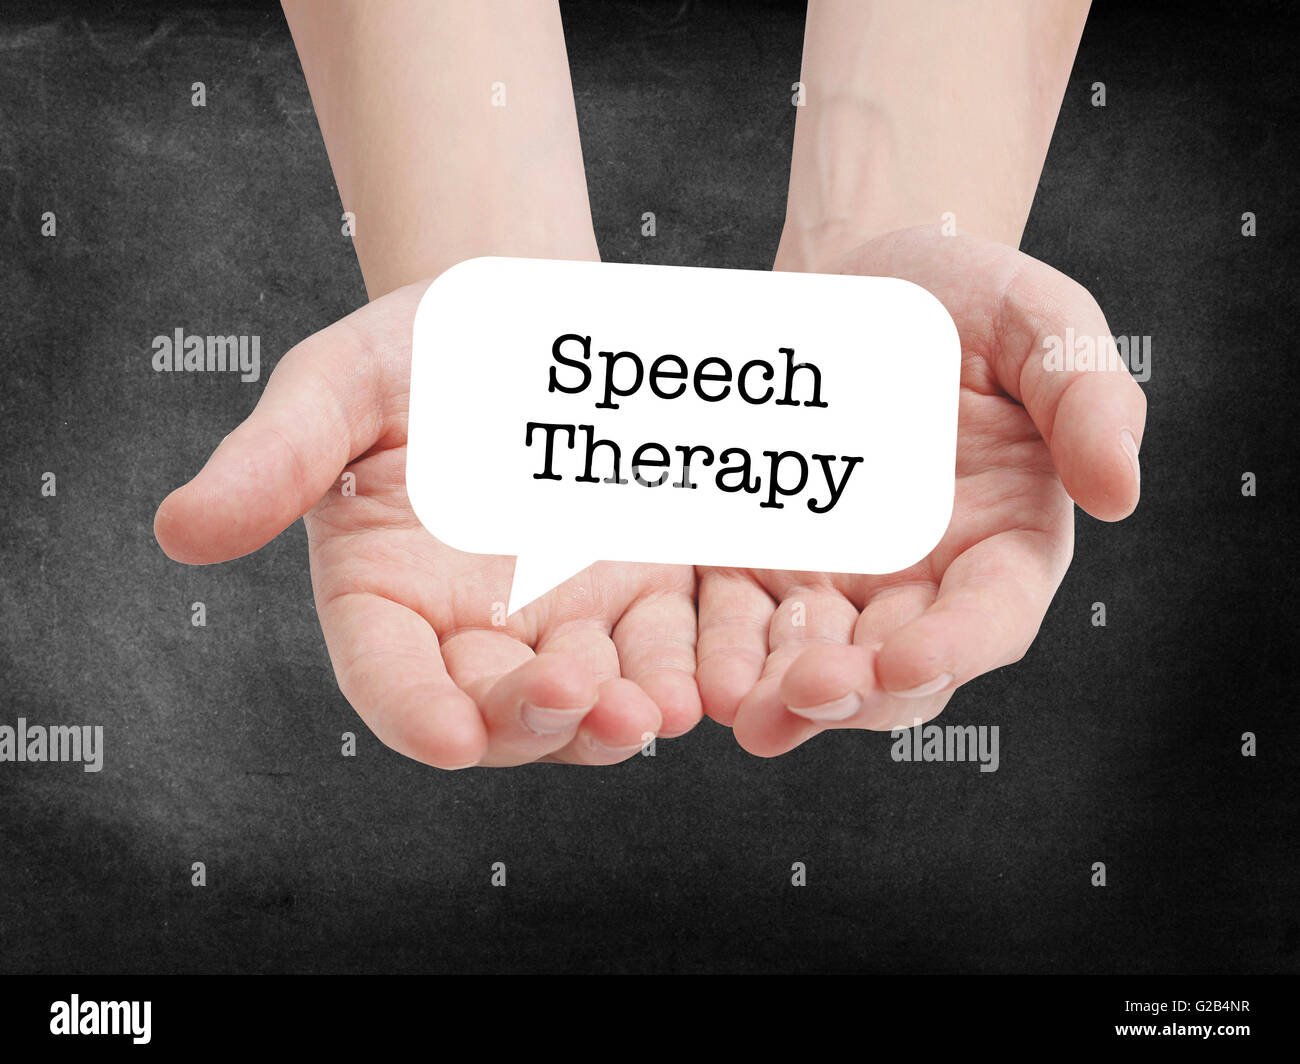 Speech therapy written on a speechbubble Stock Photo